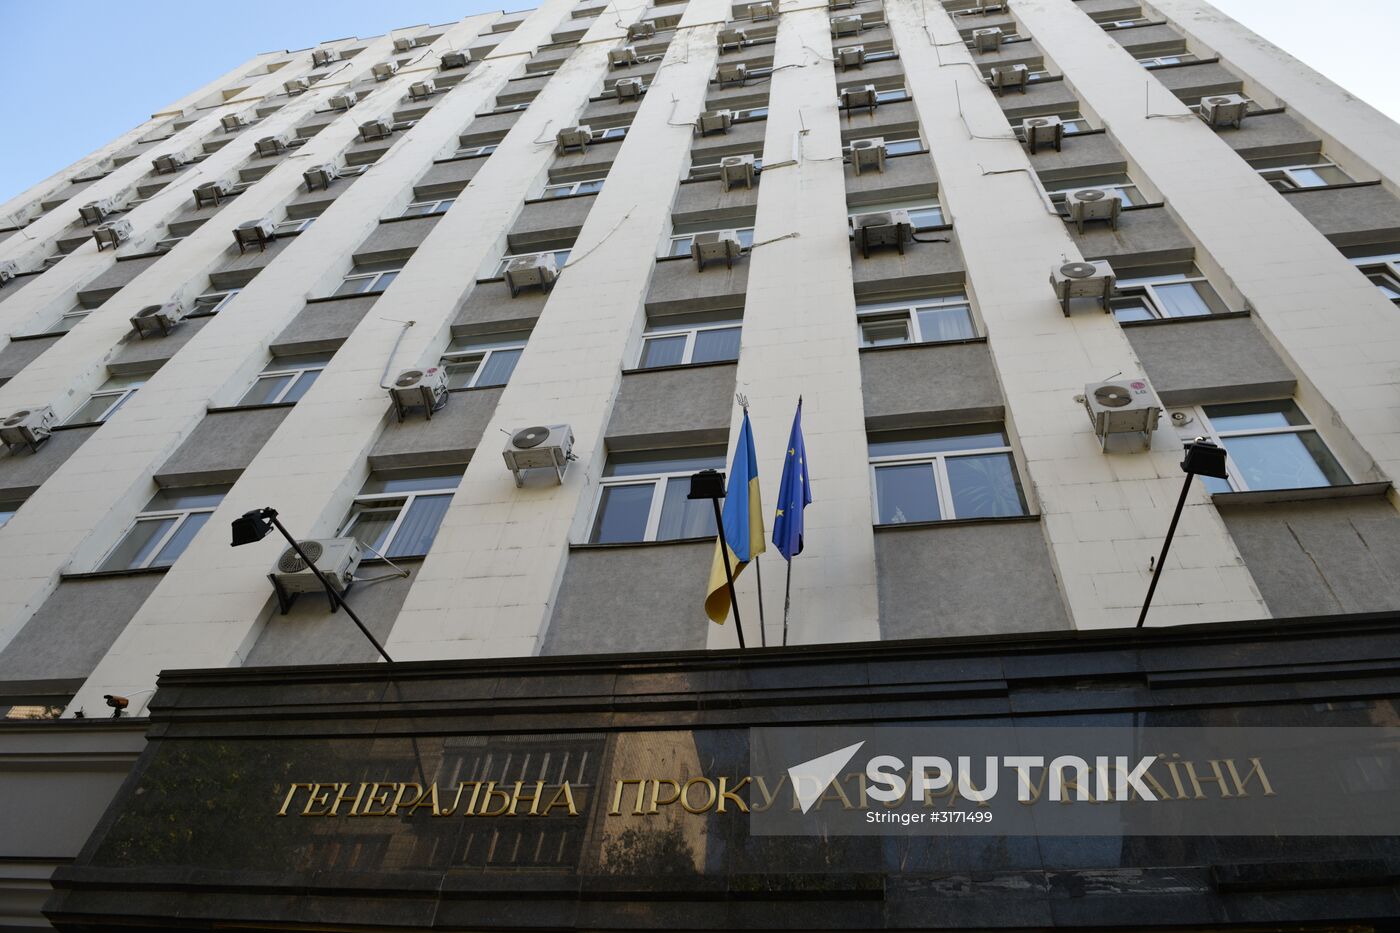 Kiev administrative buildings